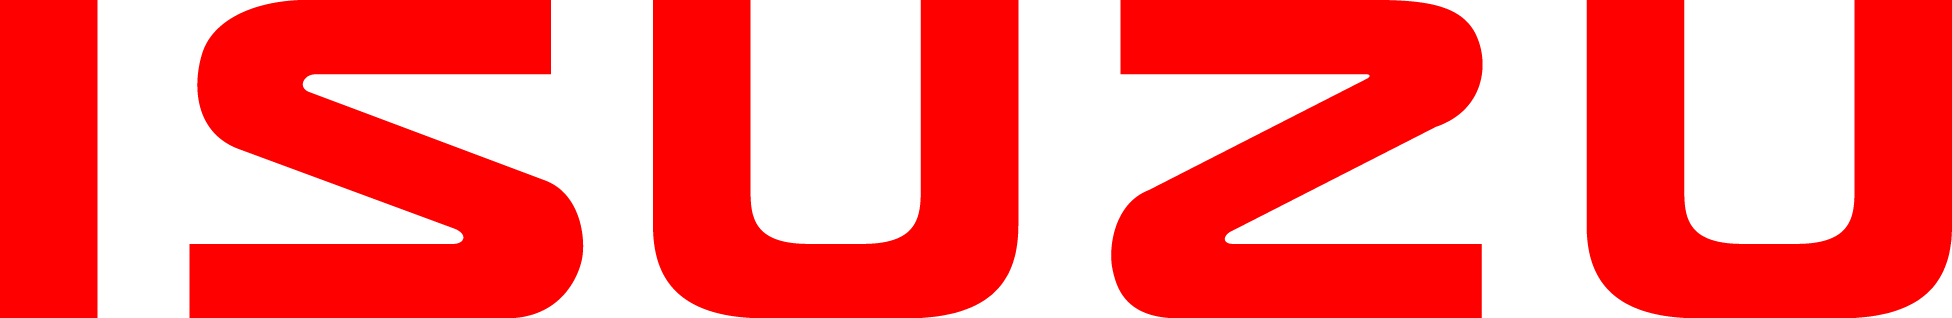 Isuzu Motors Logo png